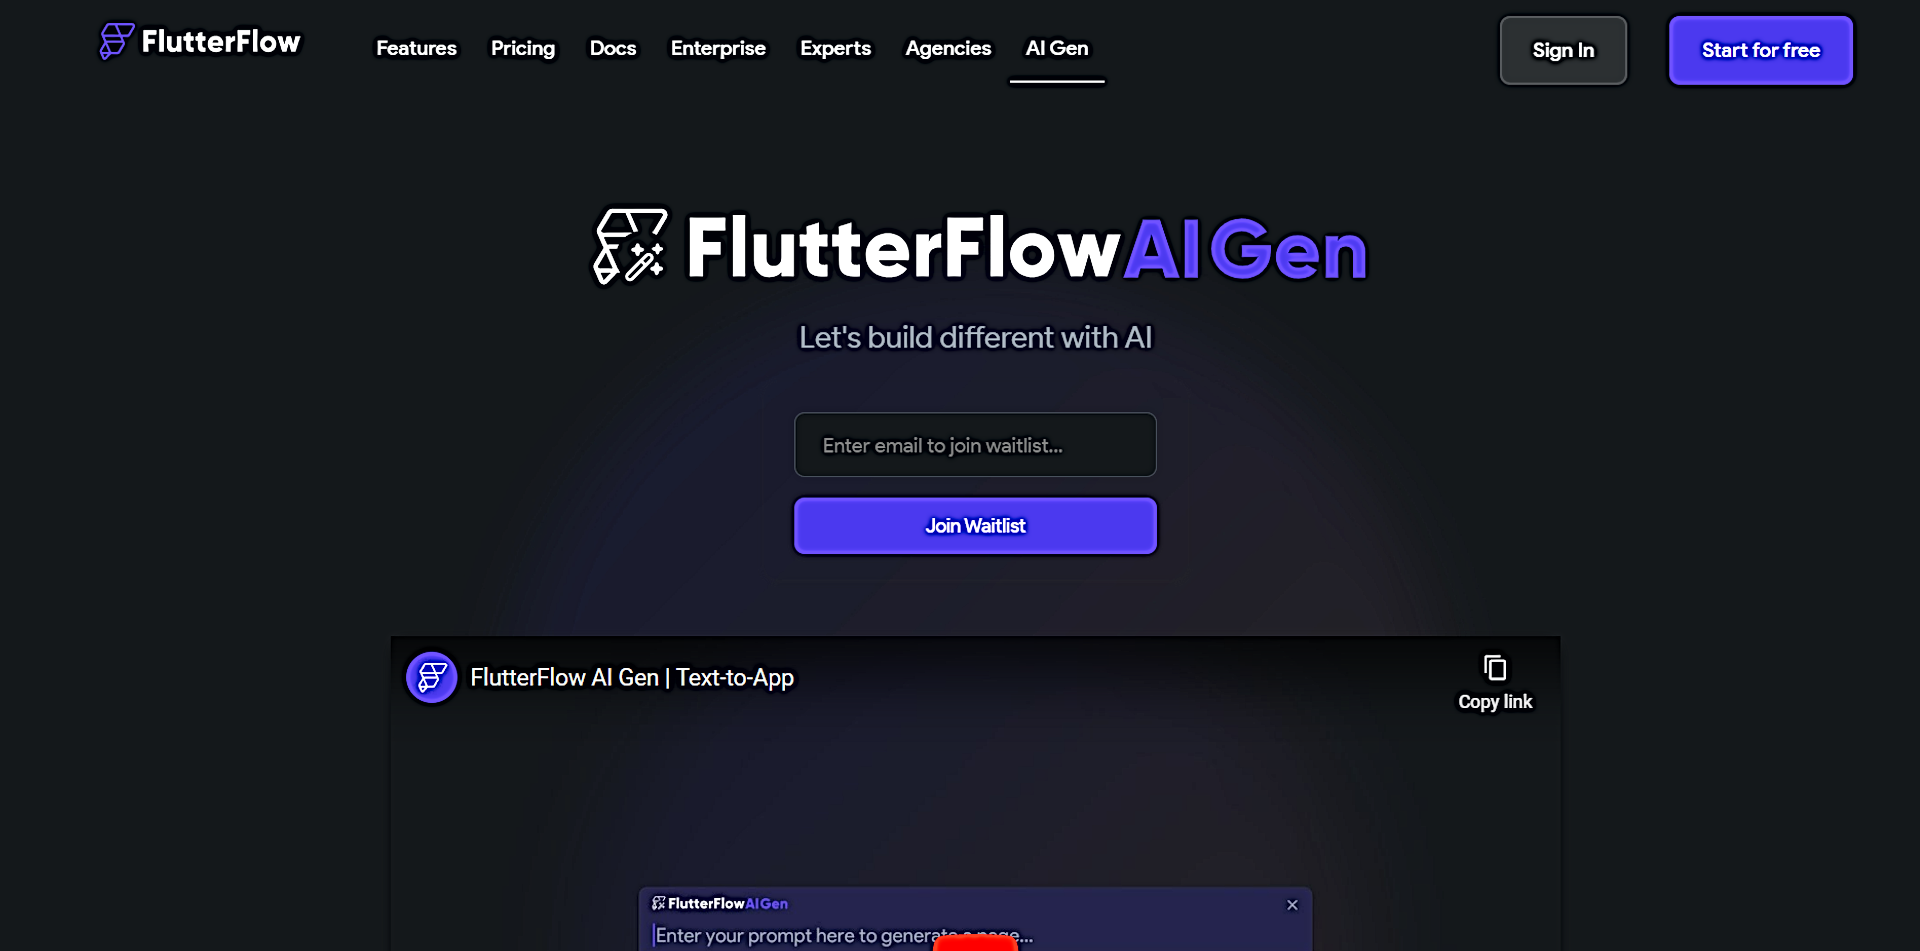 FlutterFlow AI Gen featured